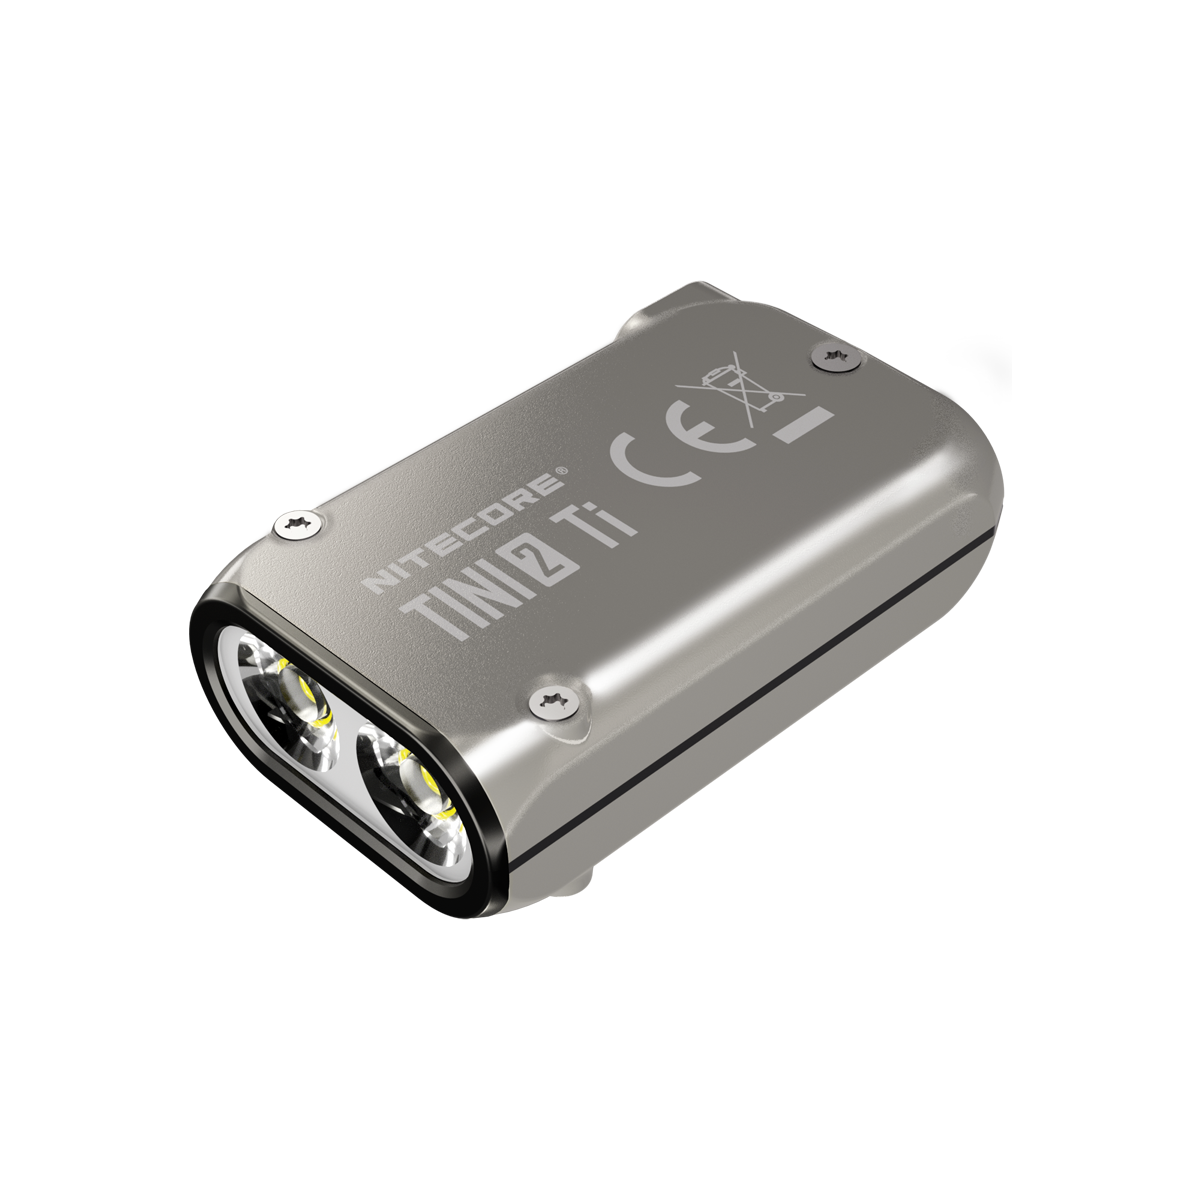 Nitecore TINI2 SS / TINI2 Ti 2x OSRAM P8 LED 500 Lumens Dual-Core Intelligent USB-C Rechargeable Keychain Light